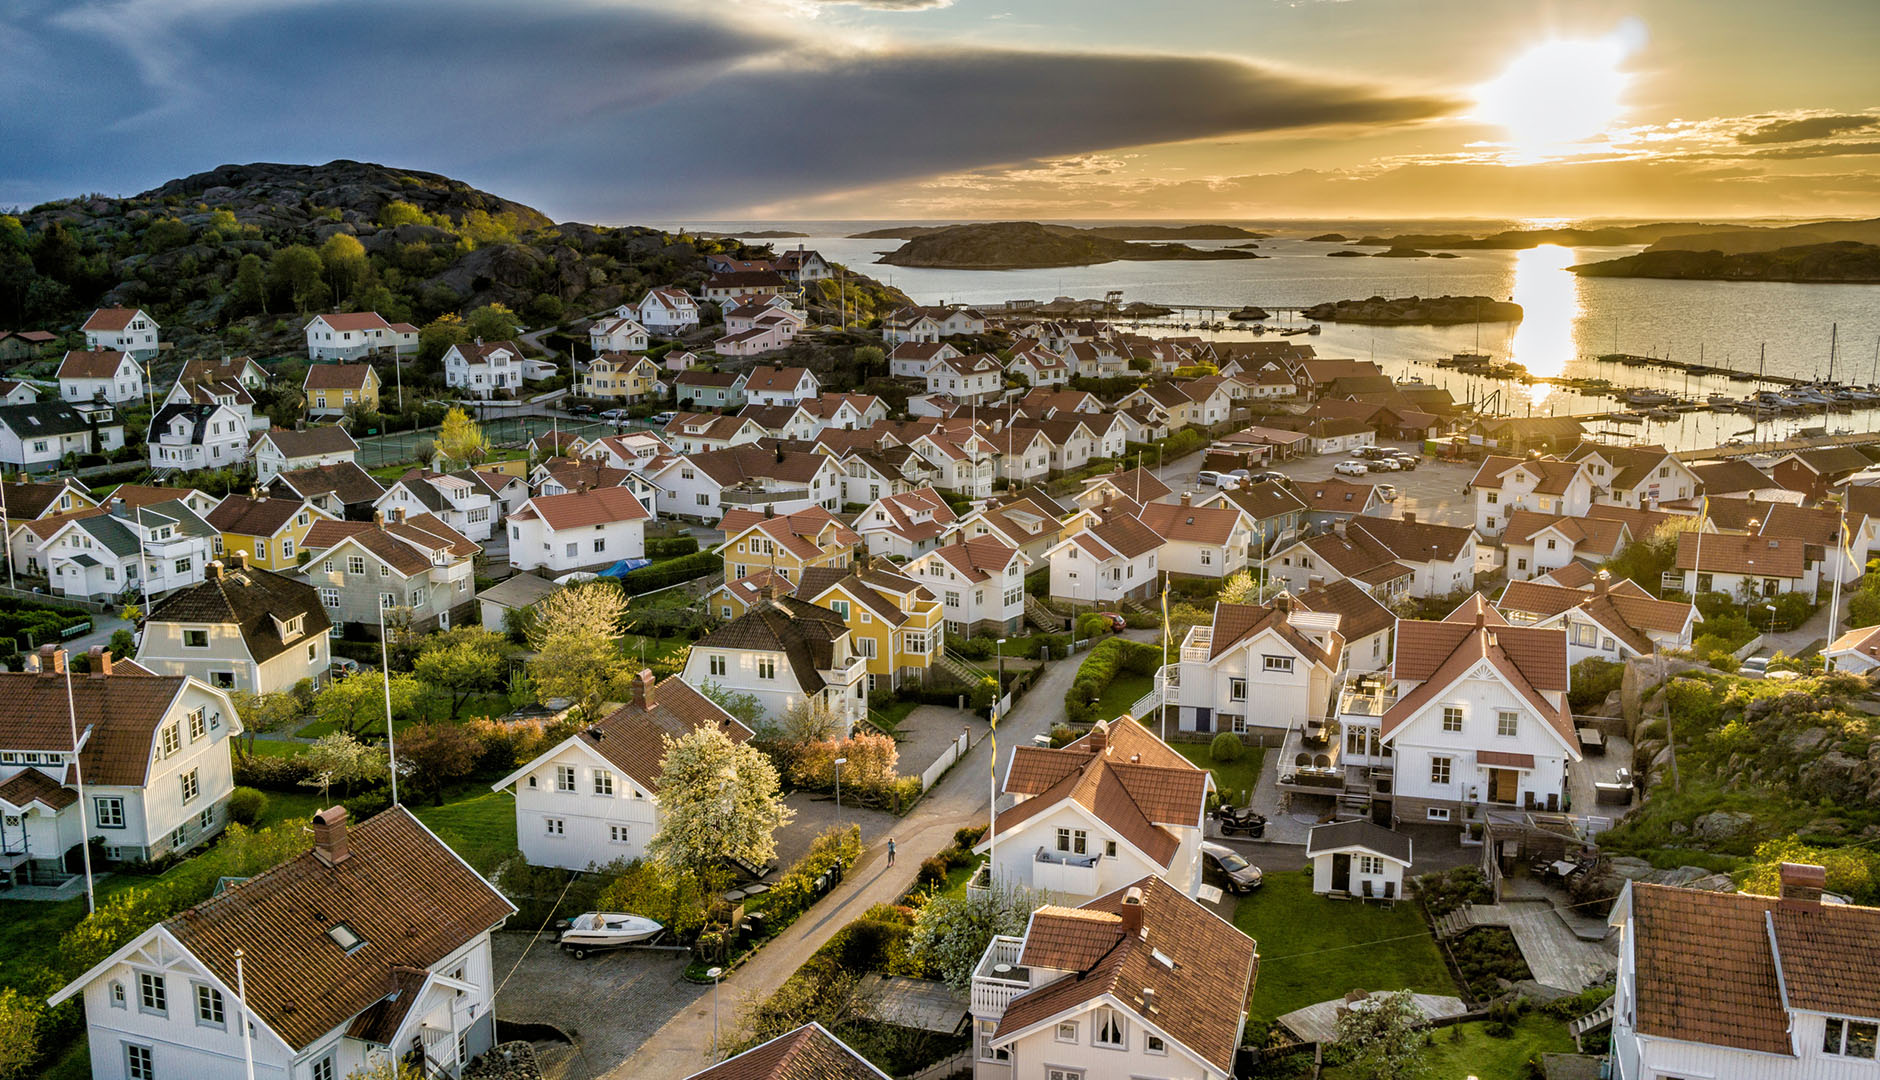 Suburb on Sweden's west coast